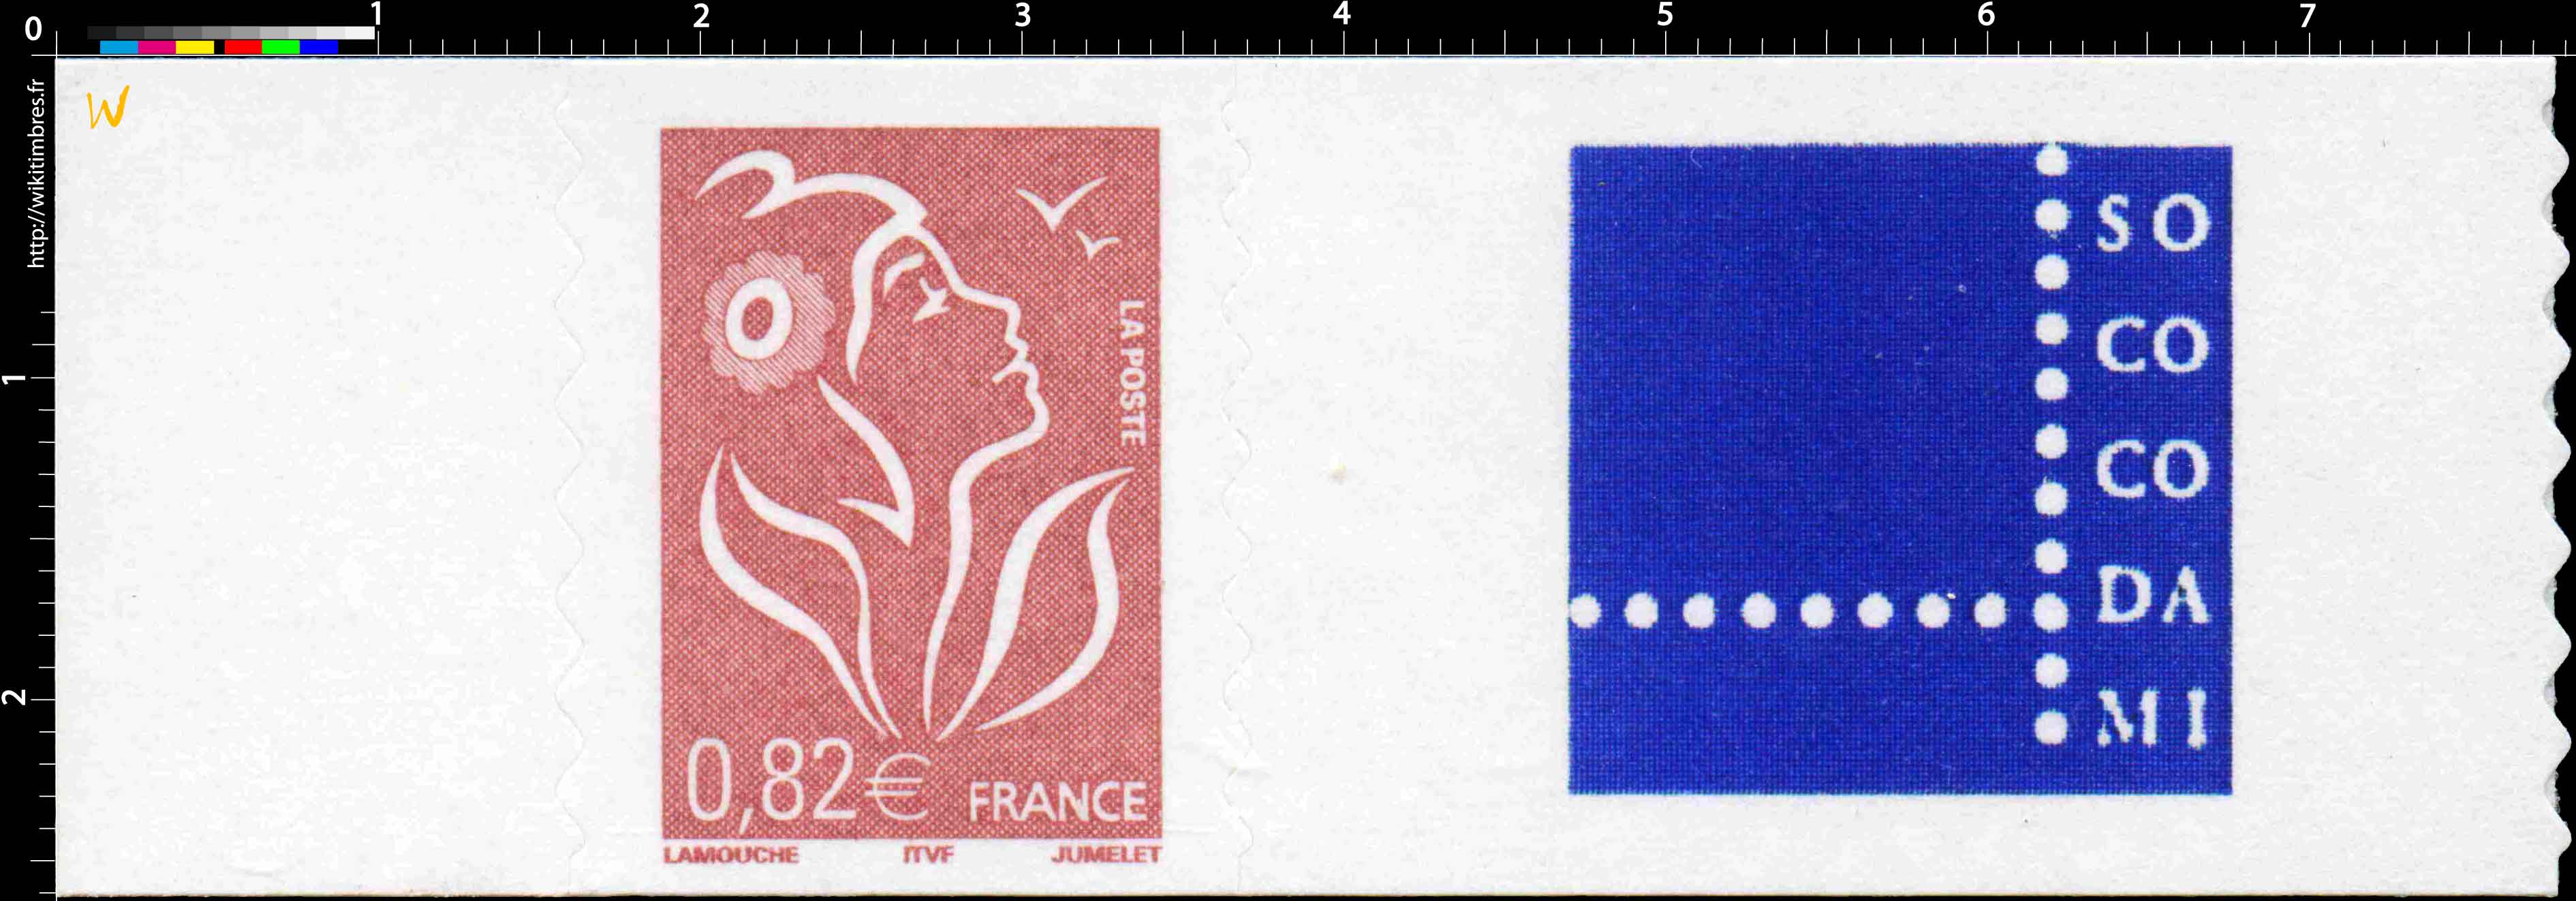 logo - type Marianne de Lamouche